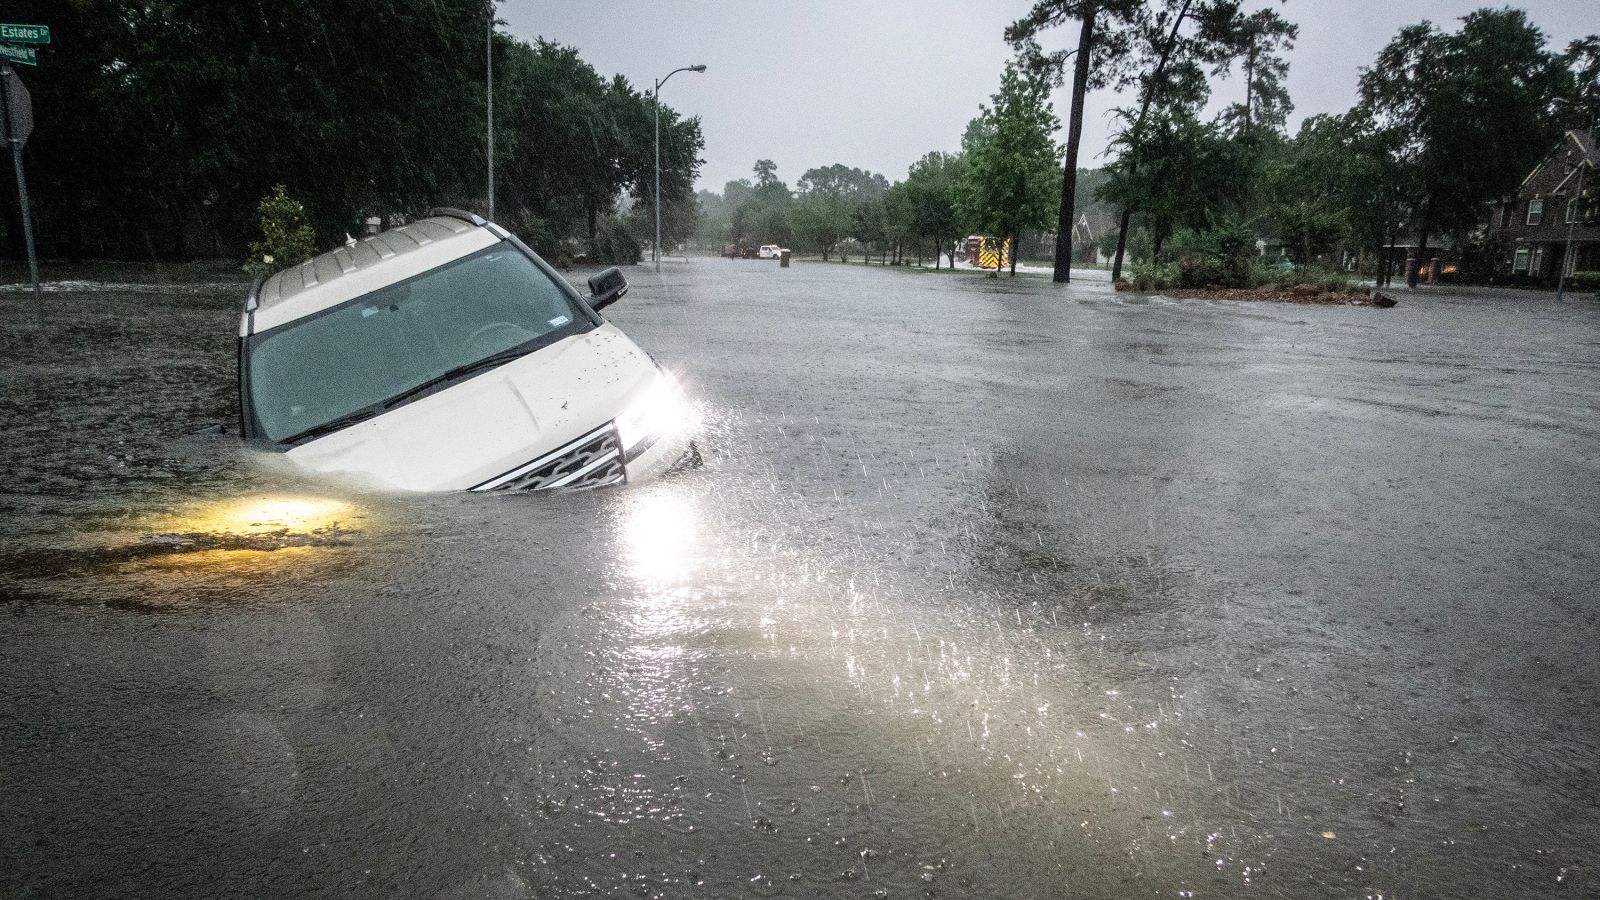 Texas hasn't seen storms flood since Hurricane Harvey